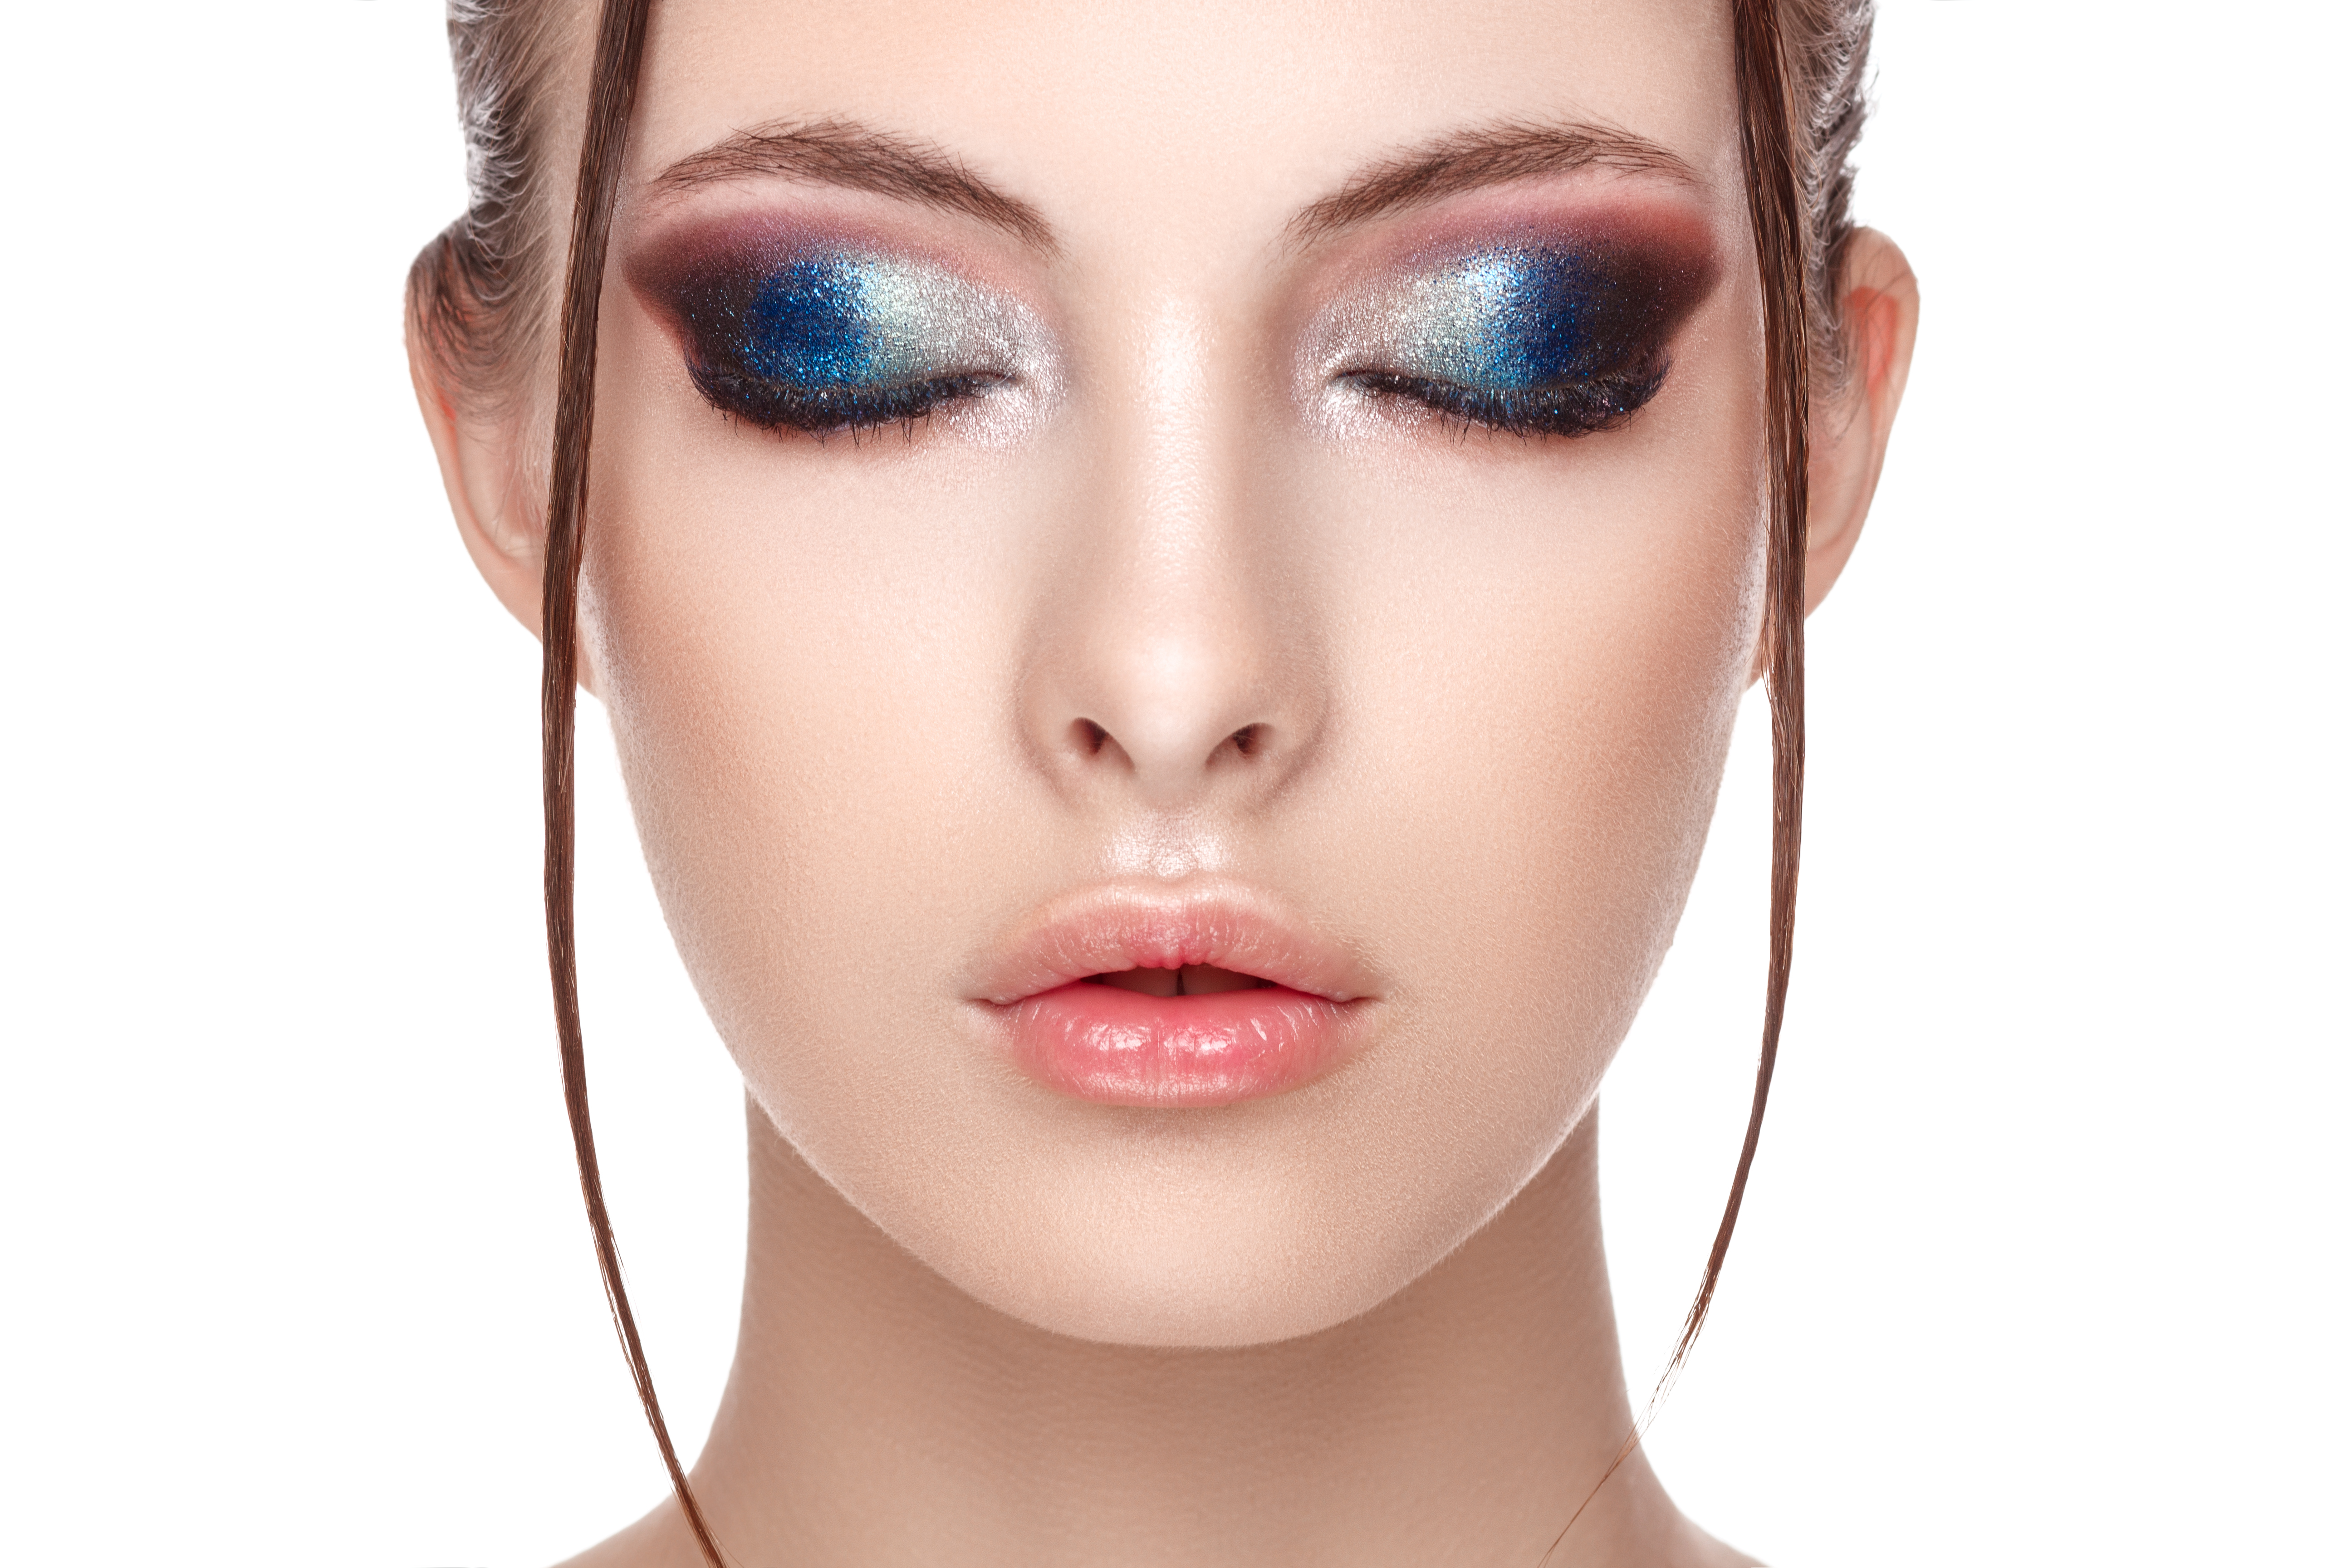 A model with a wet eye makeup look | Source: Shutterstock